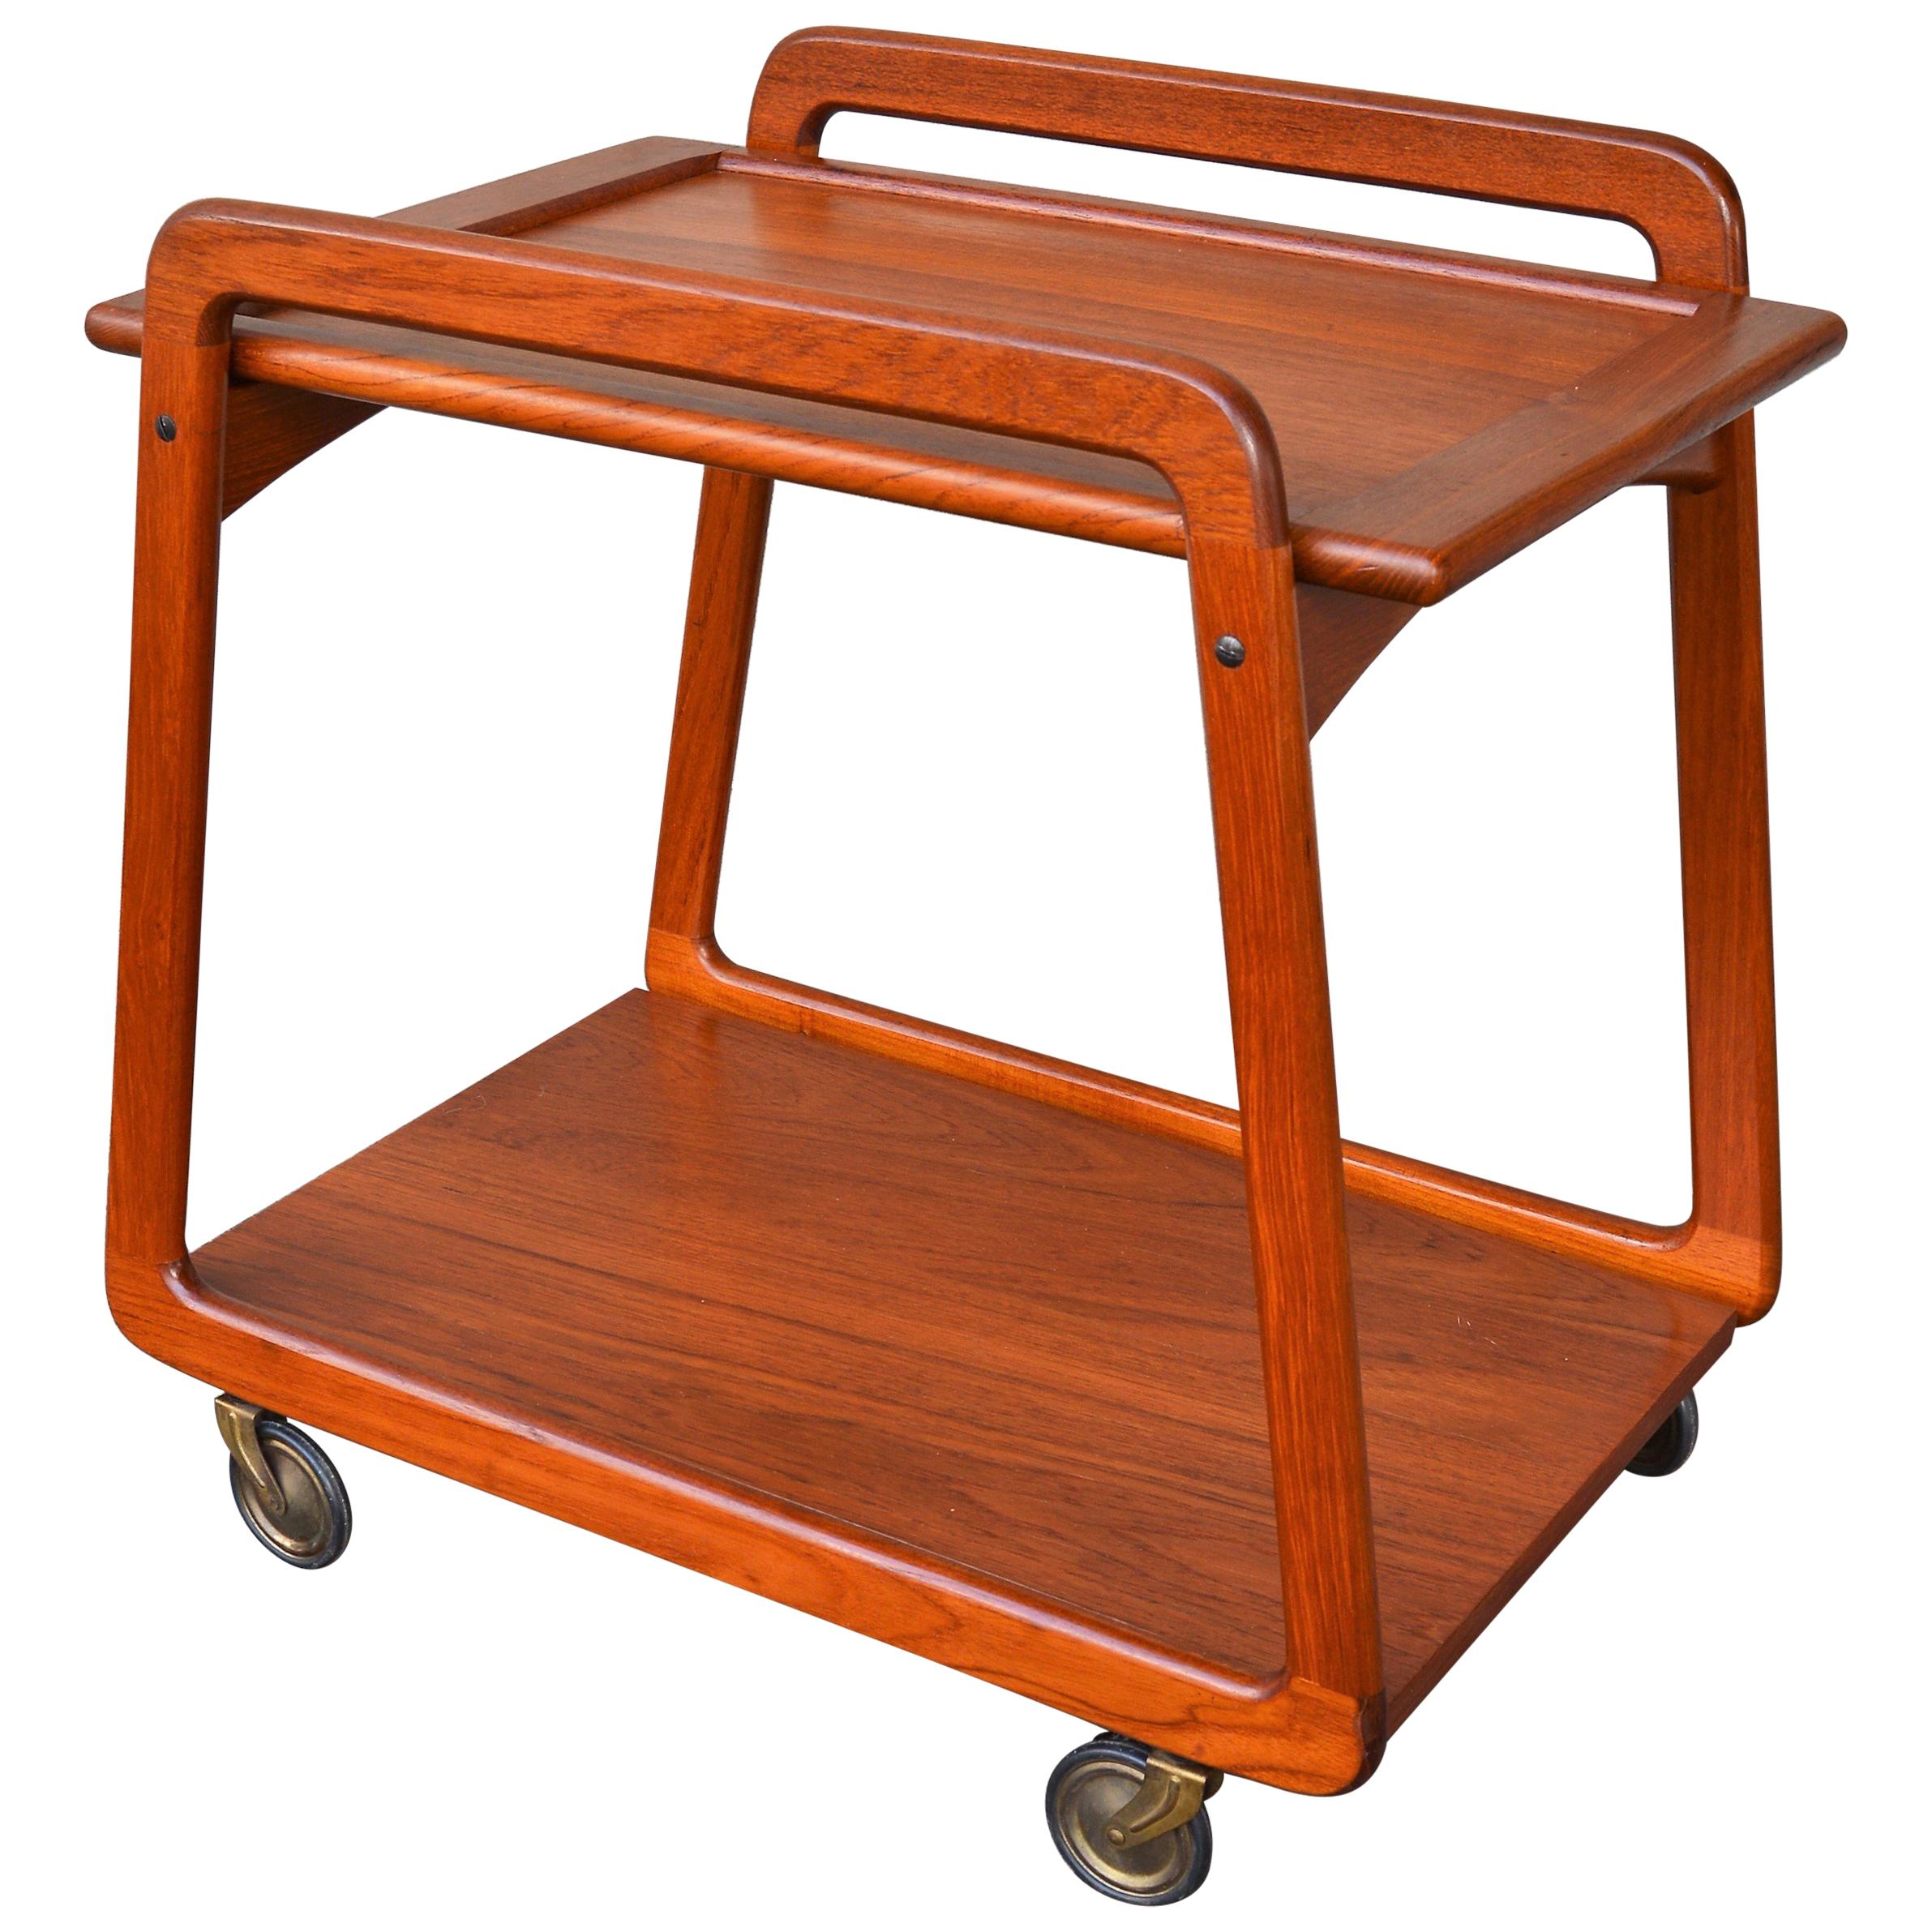 Teak Reversible Tray Top Bar Cart or Tea Trolley by Sika Møbler